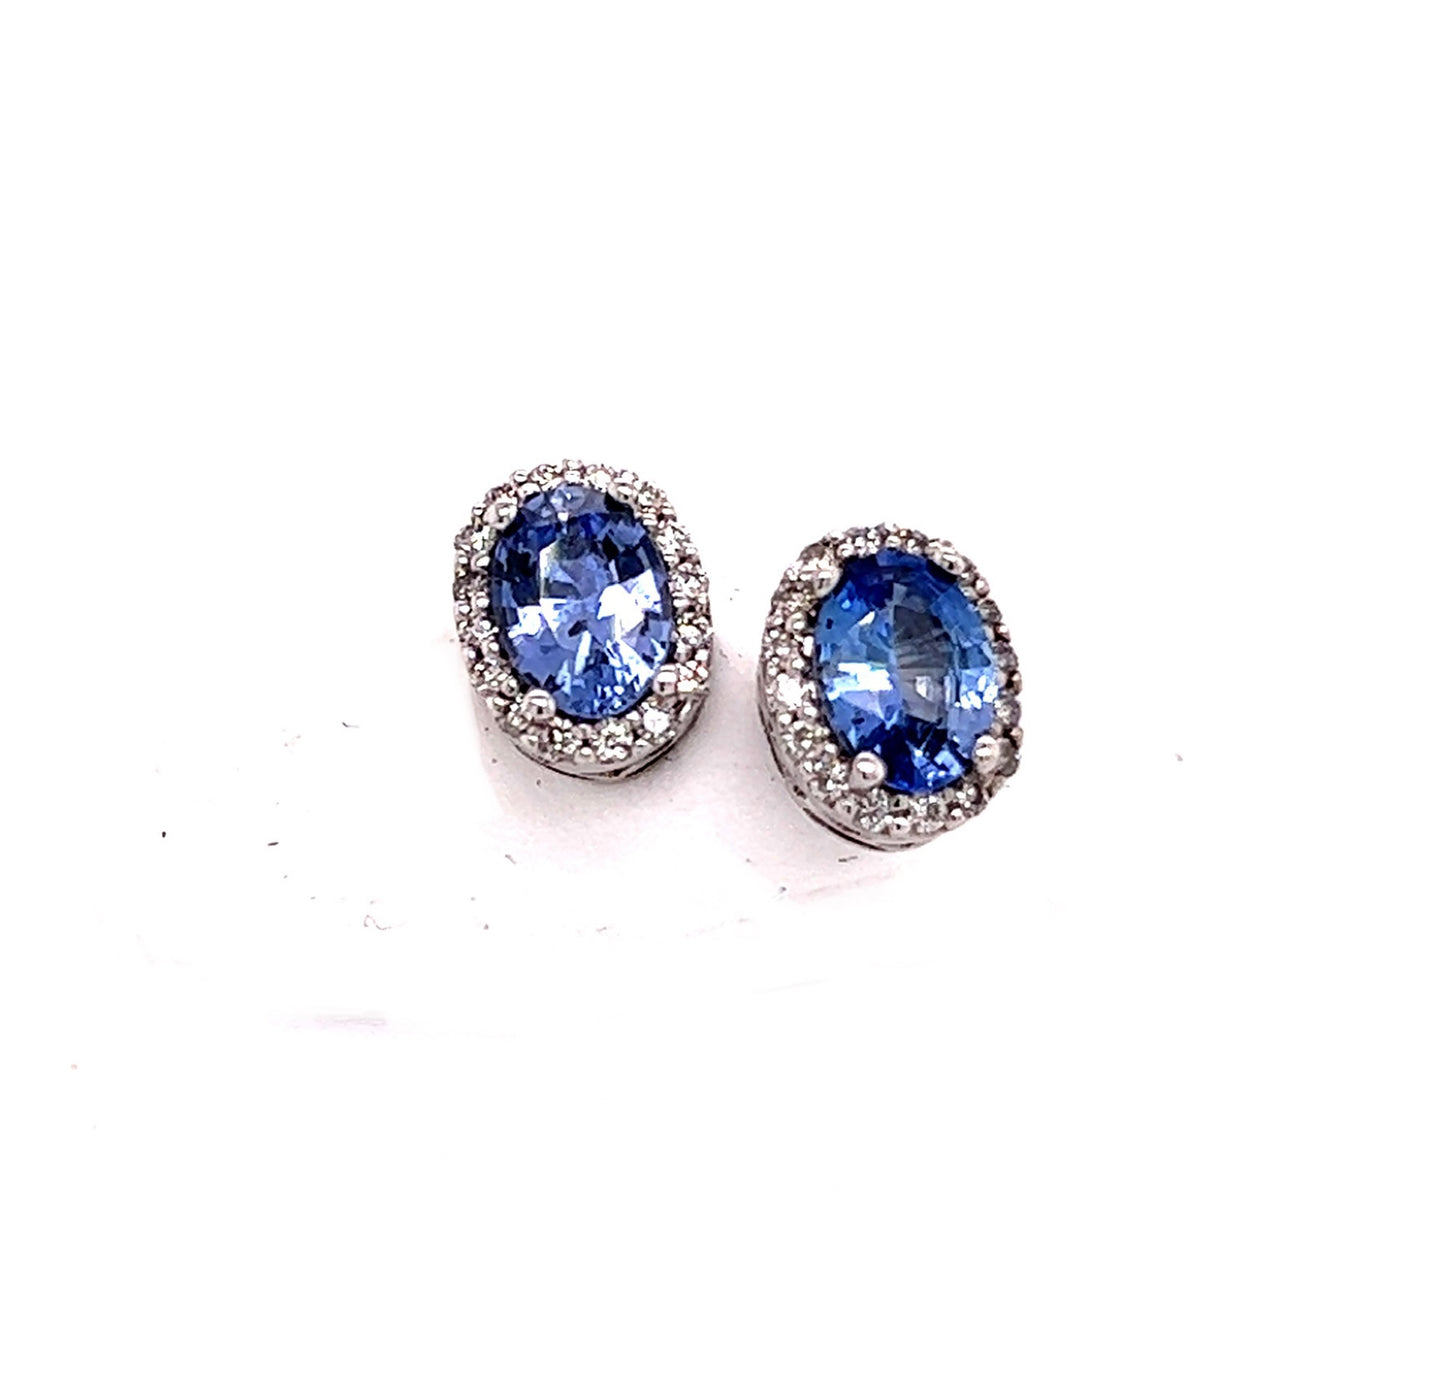 Natural Sapphire Diamond Earrings 14k Gold 1.73 TCW Certified $3,950 121272 - Certified Estate Jewelry